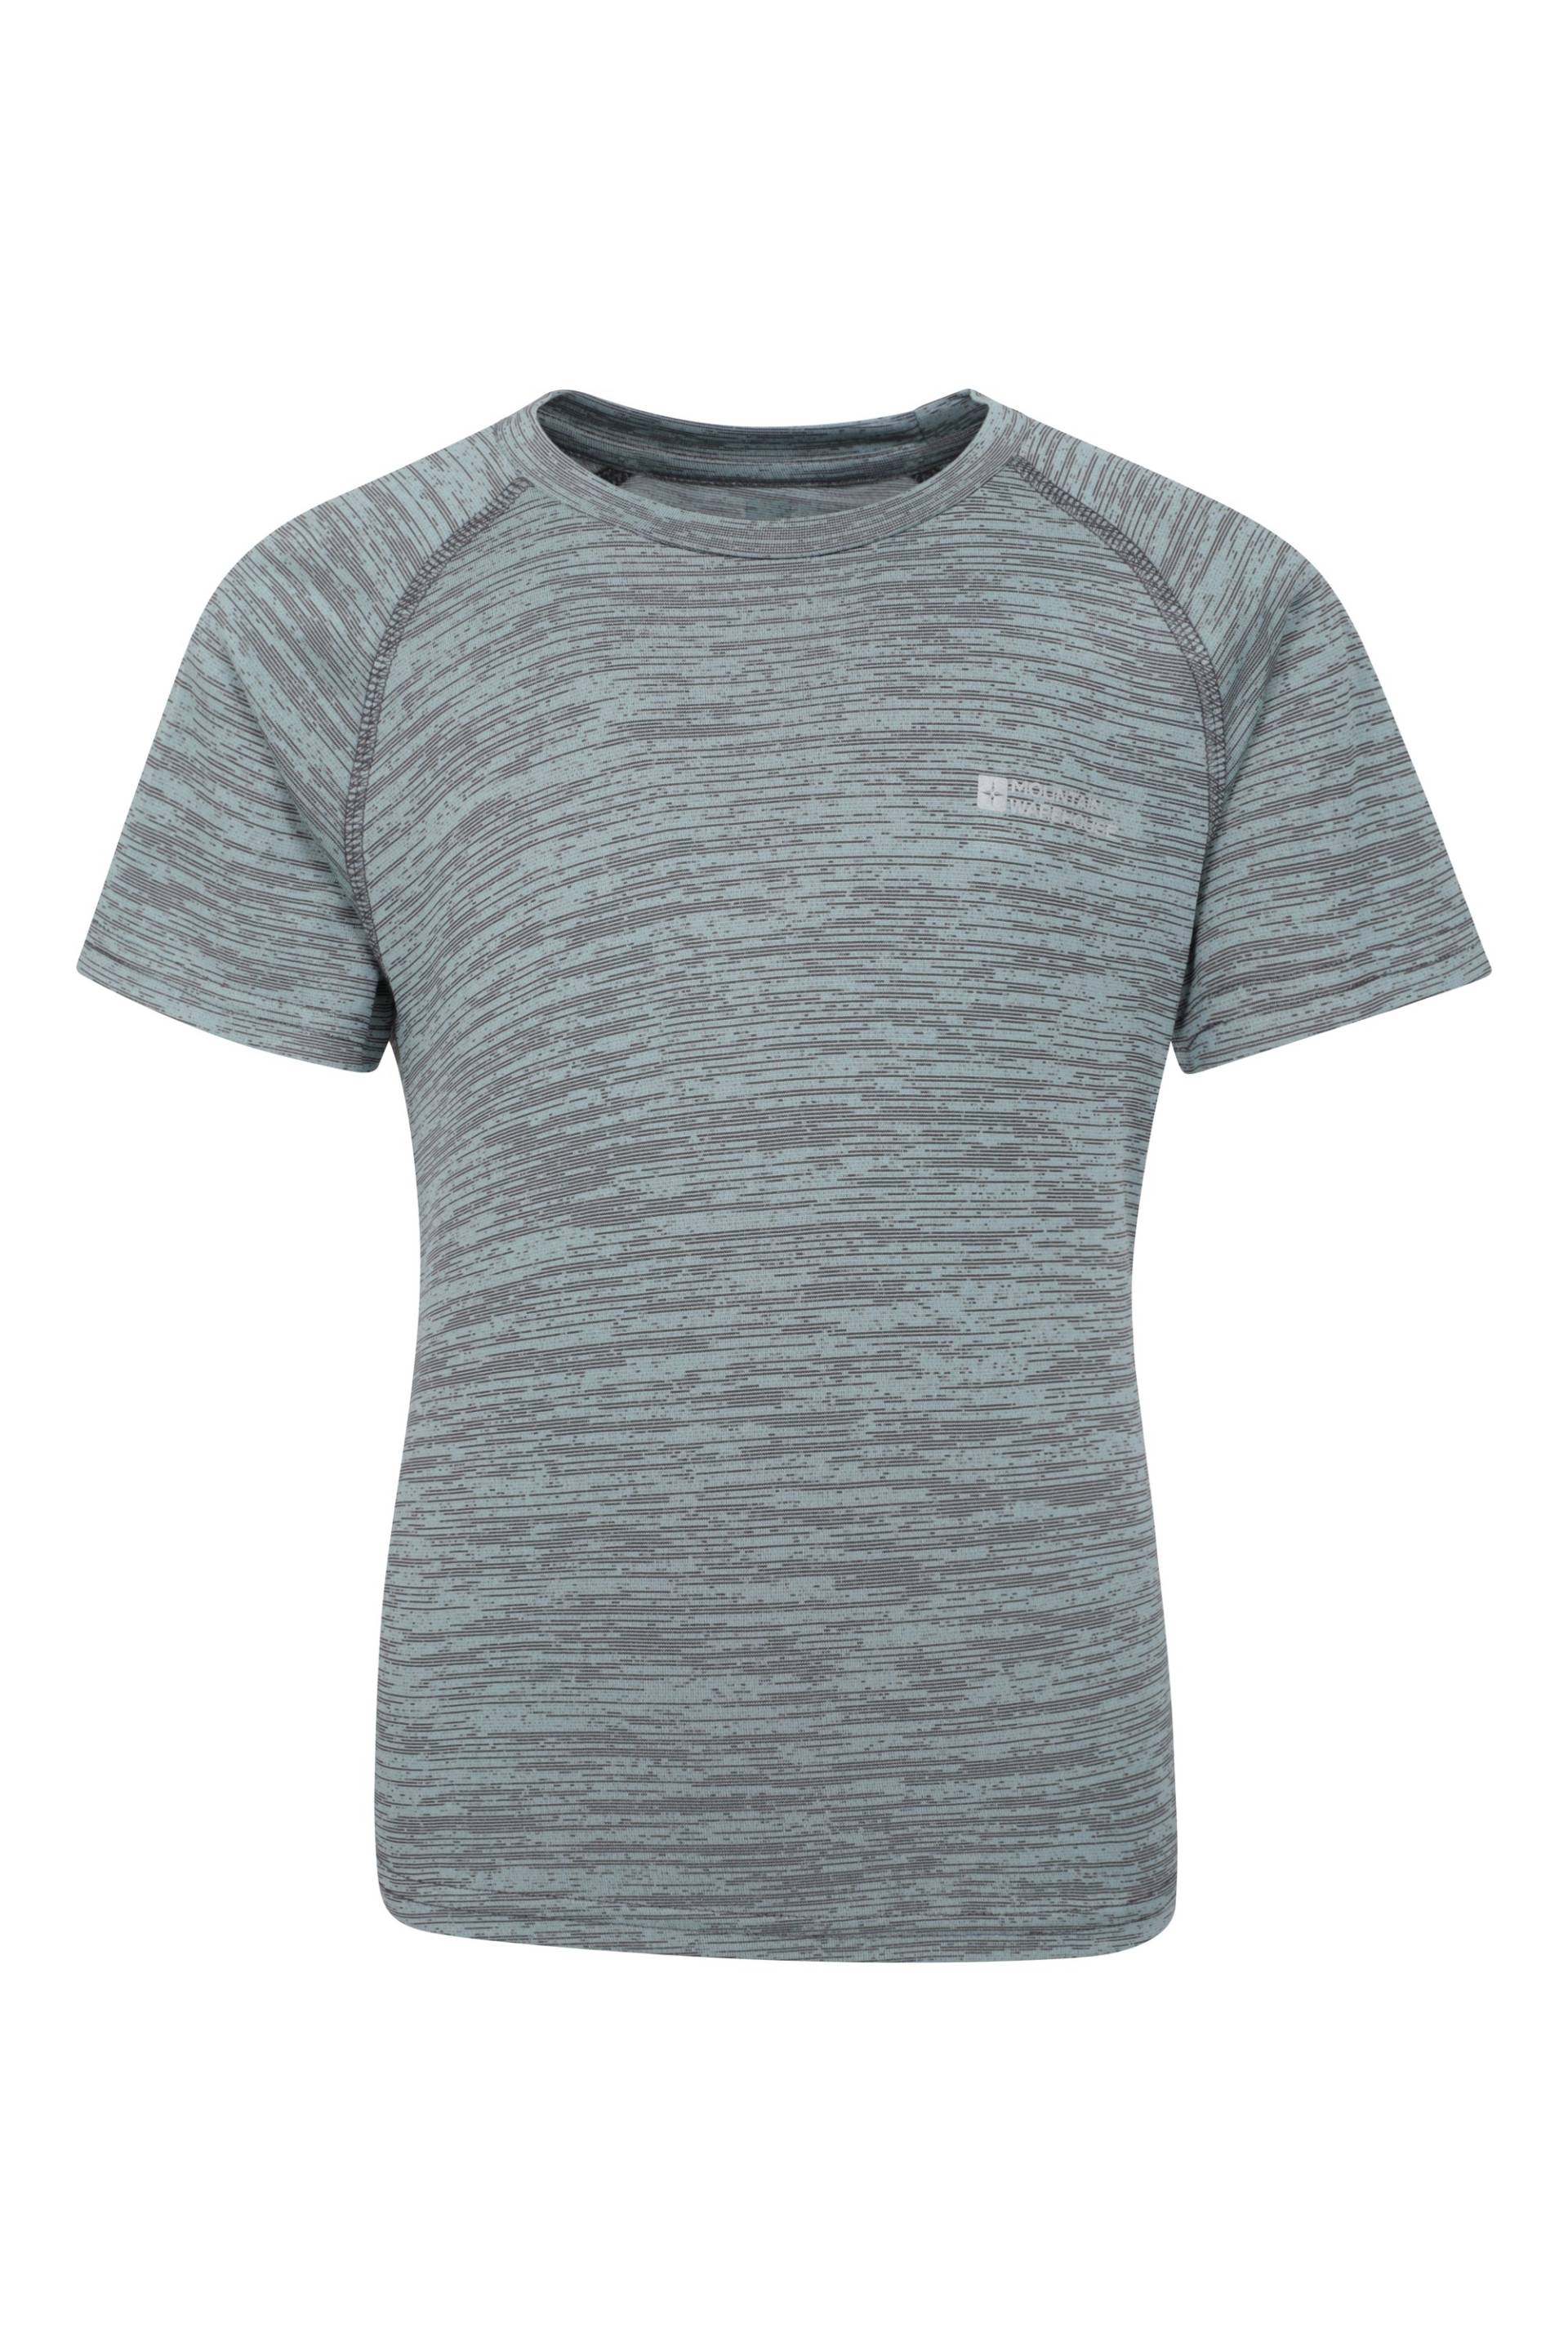 Plain Field Jungen T-Shirt - Grau von Mountain Warehouse